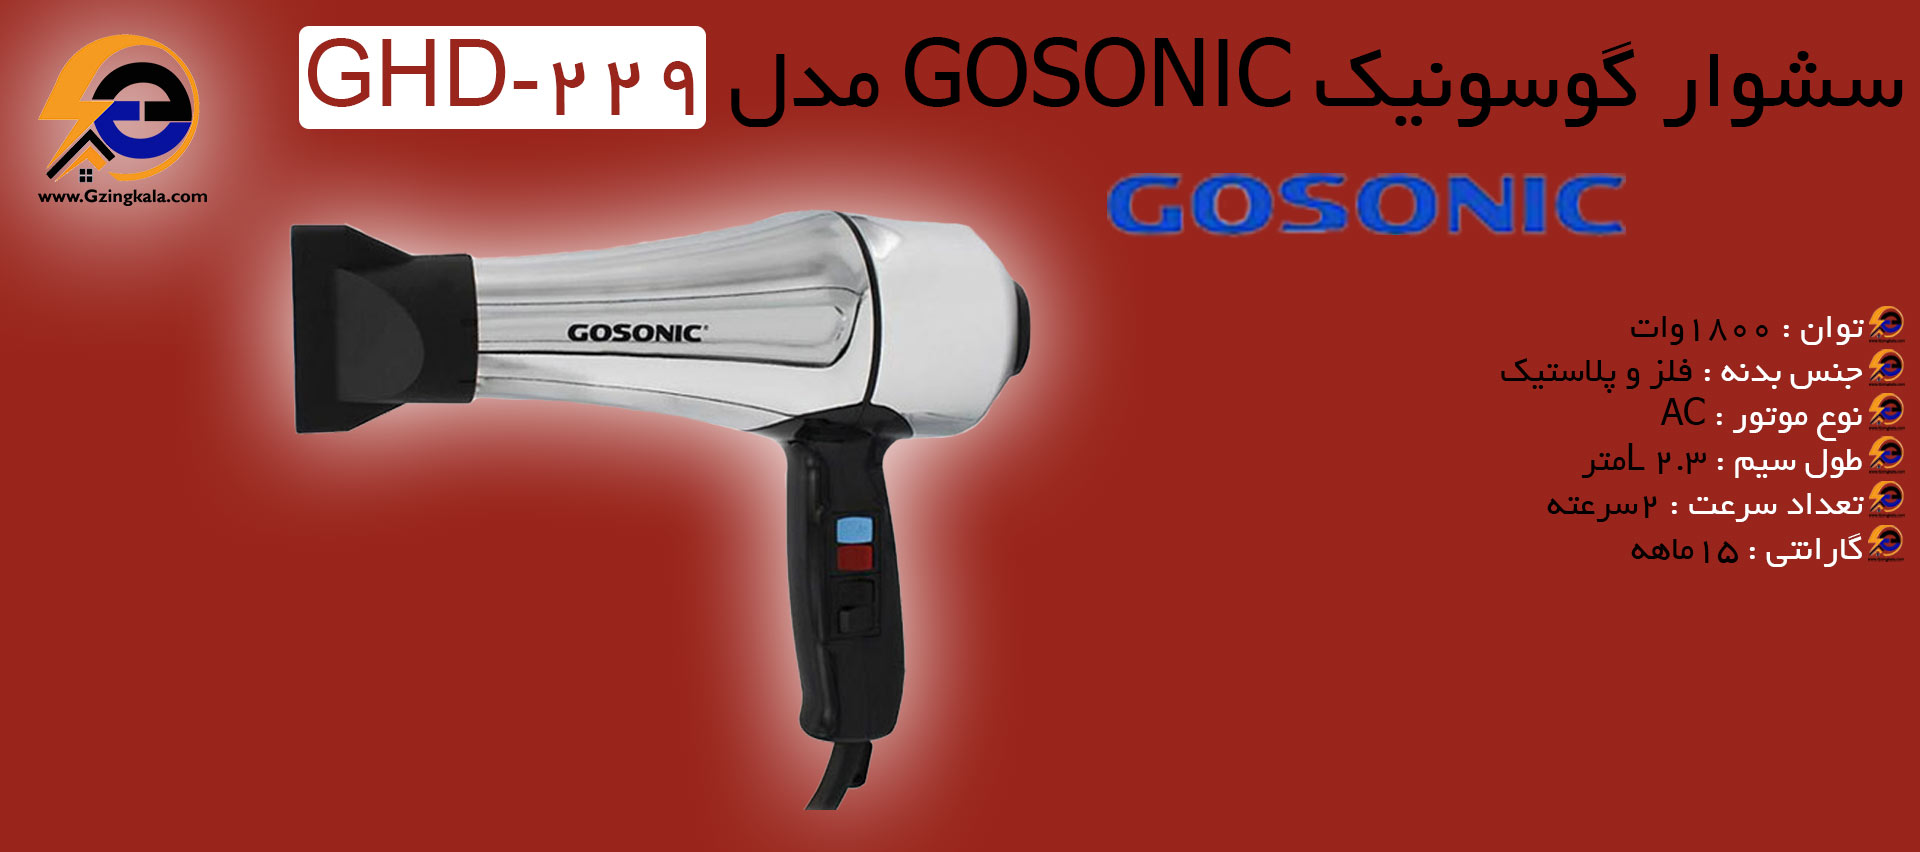 سشوار گوسونیک Gosonic مدل 229-GHD